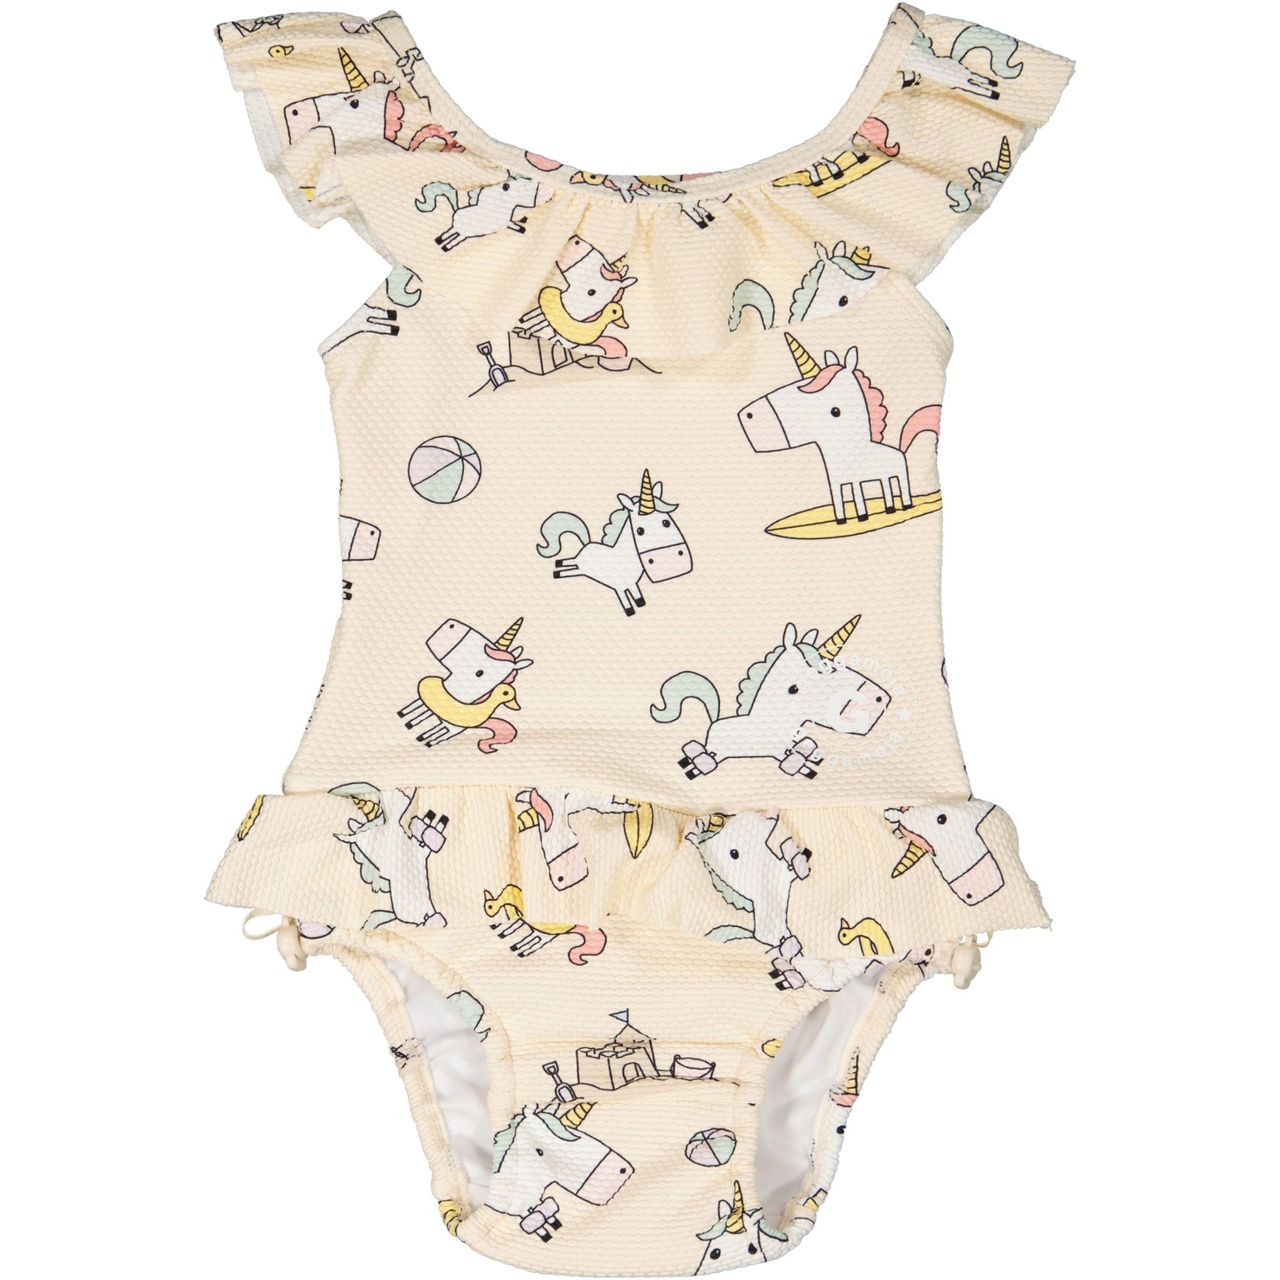 UV Baby swim suit Beige unicorn 62/68